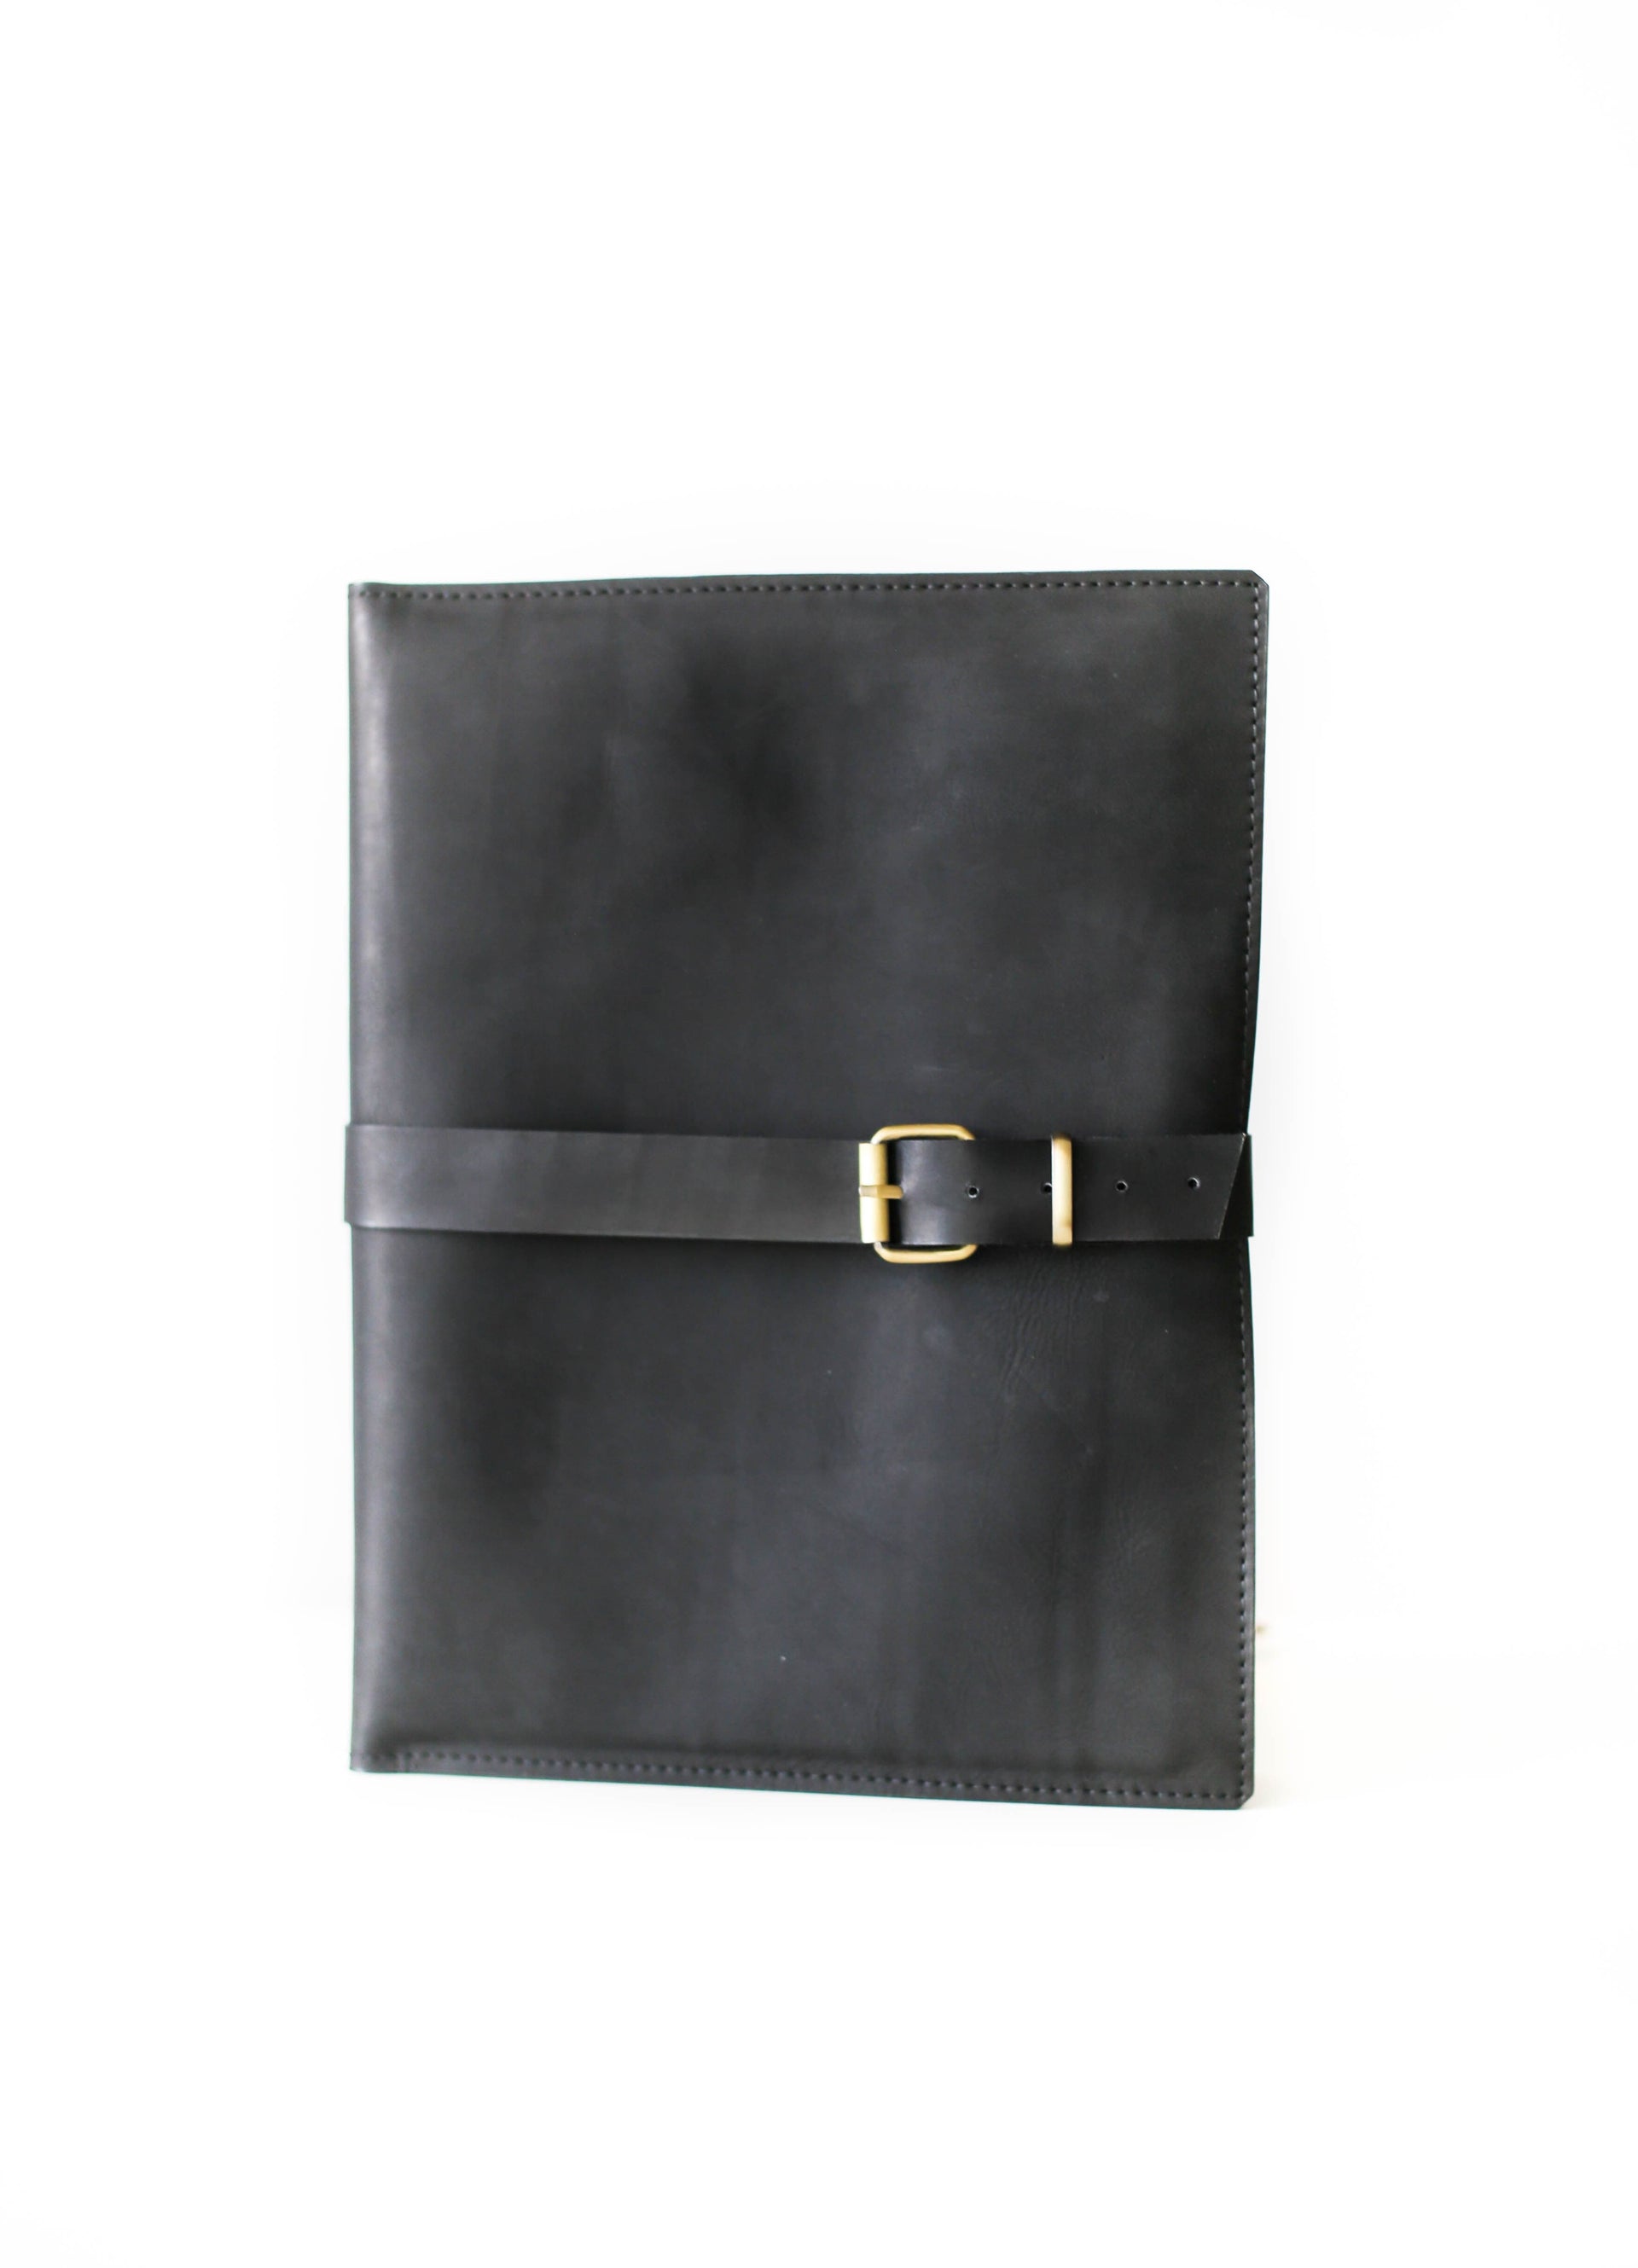 black leather ipad case